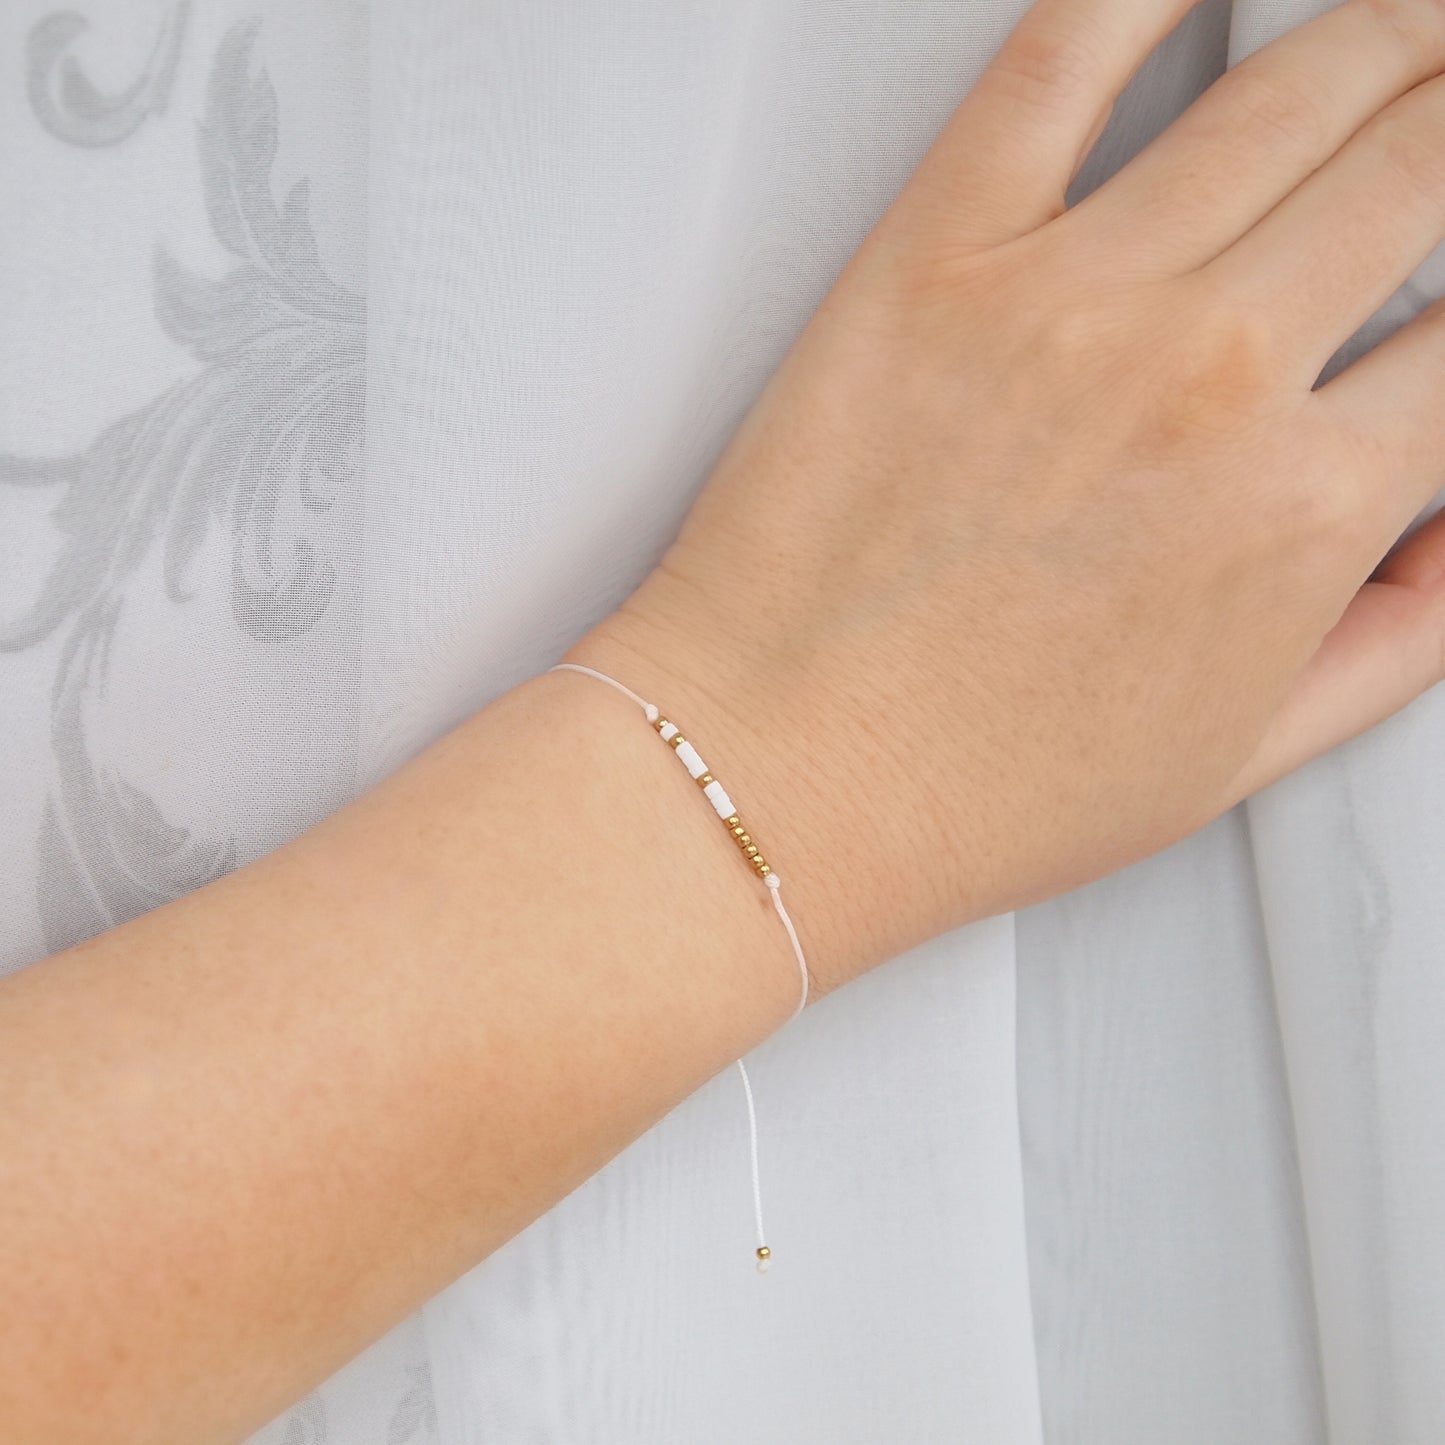 dainty personalized bracelet, meaningful jewelry